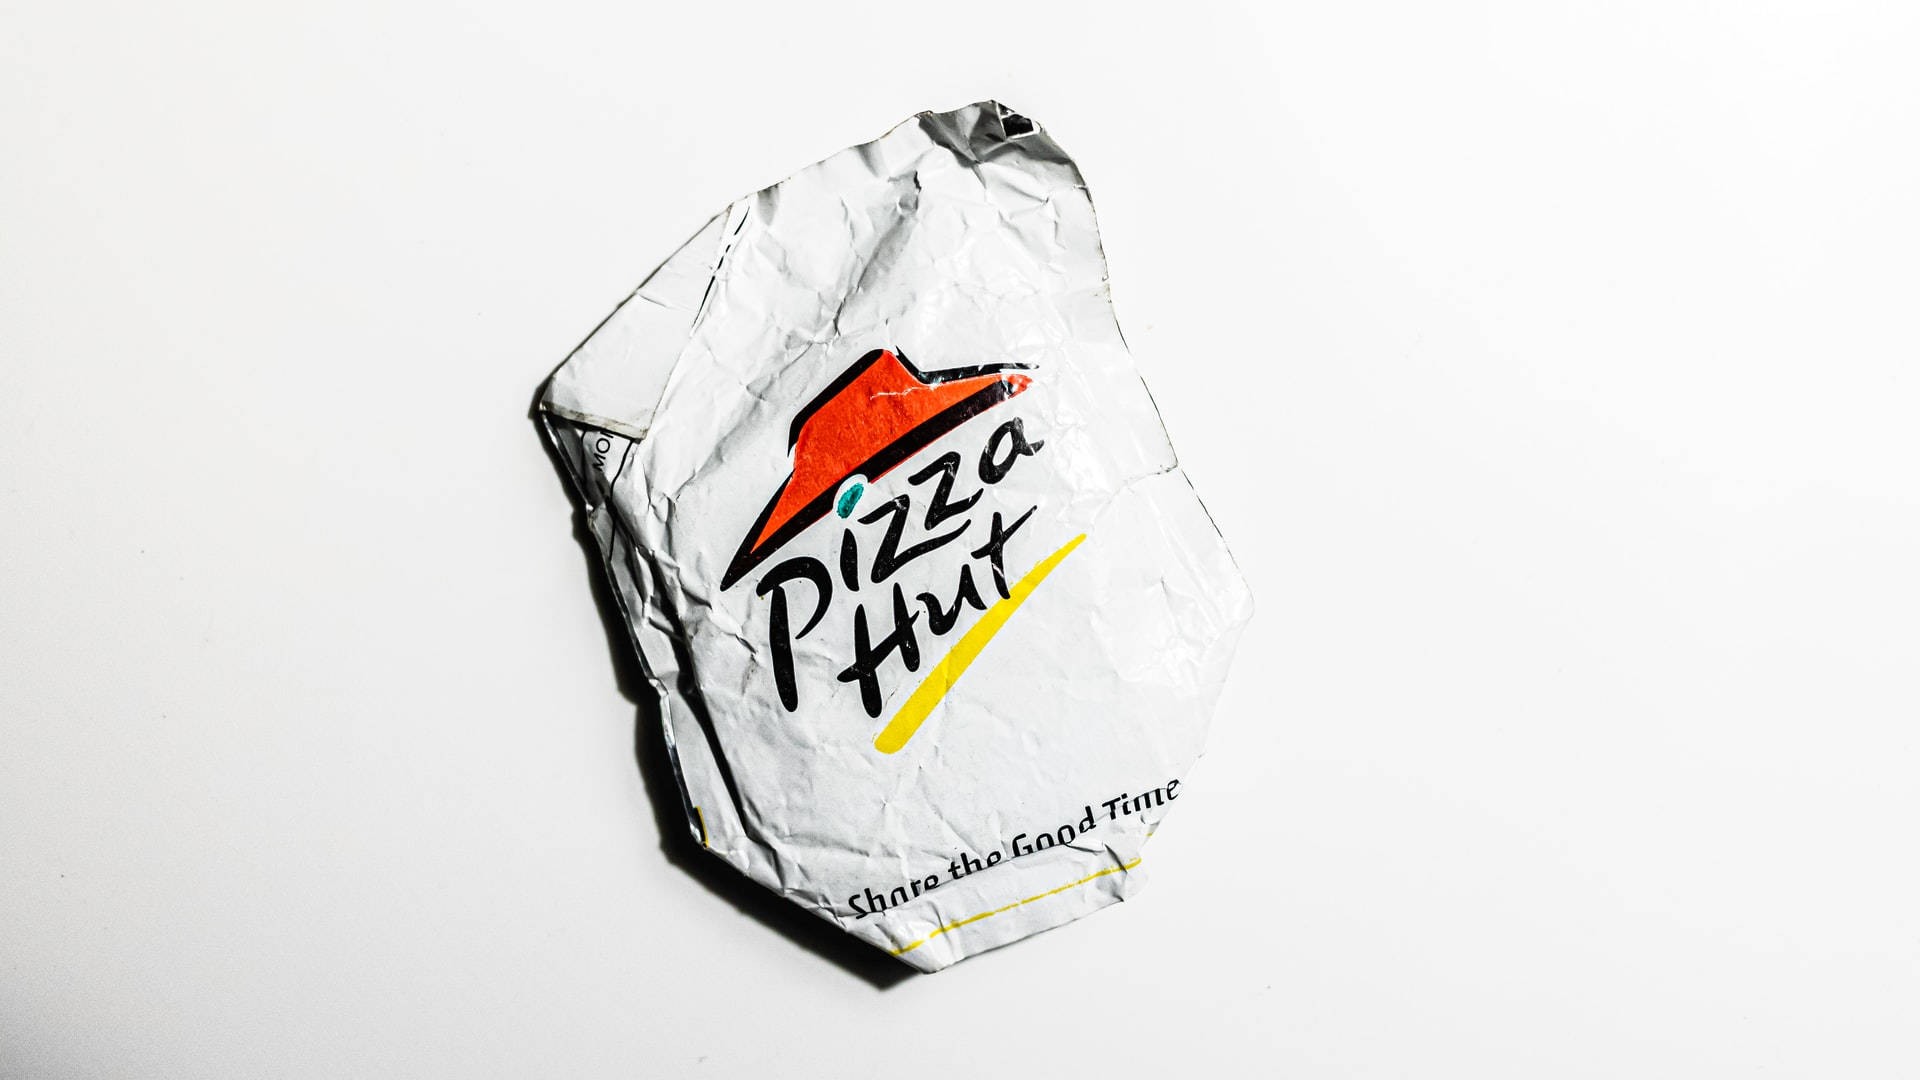 Top 999+ Pizza Hut Wallpaper Full HD, 4K✅Free to Use